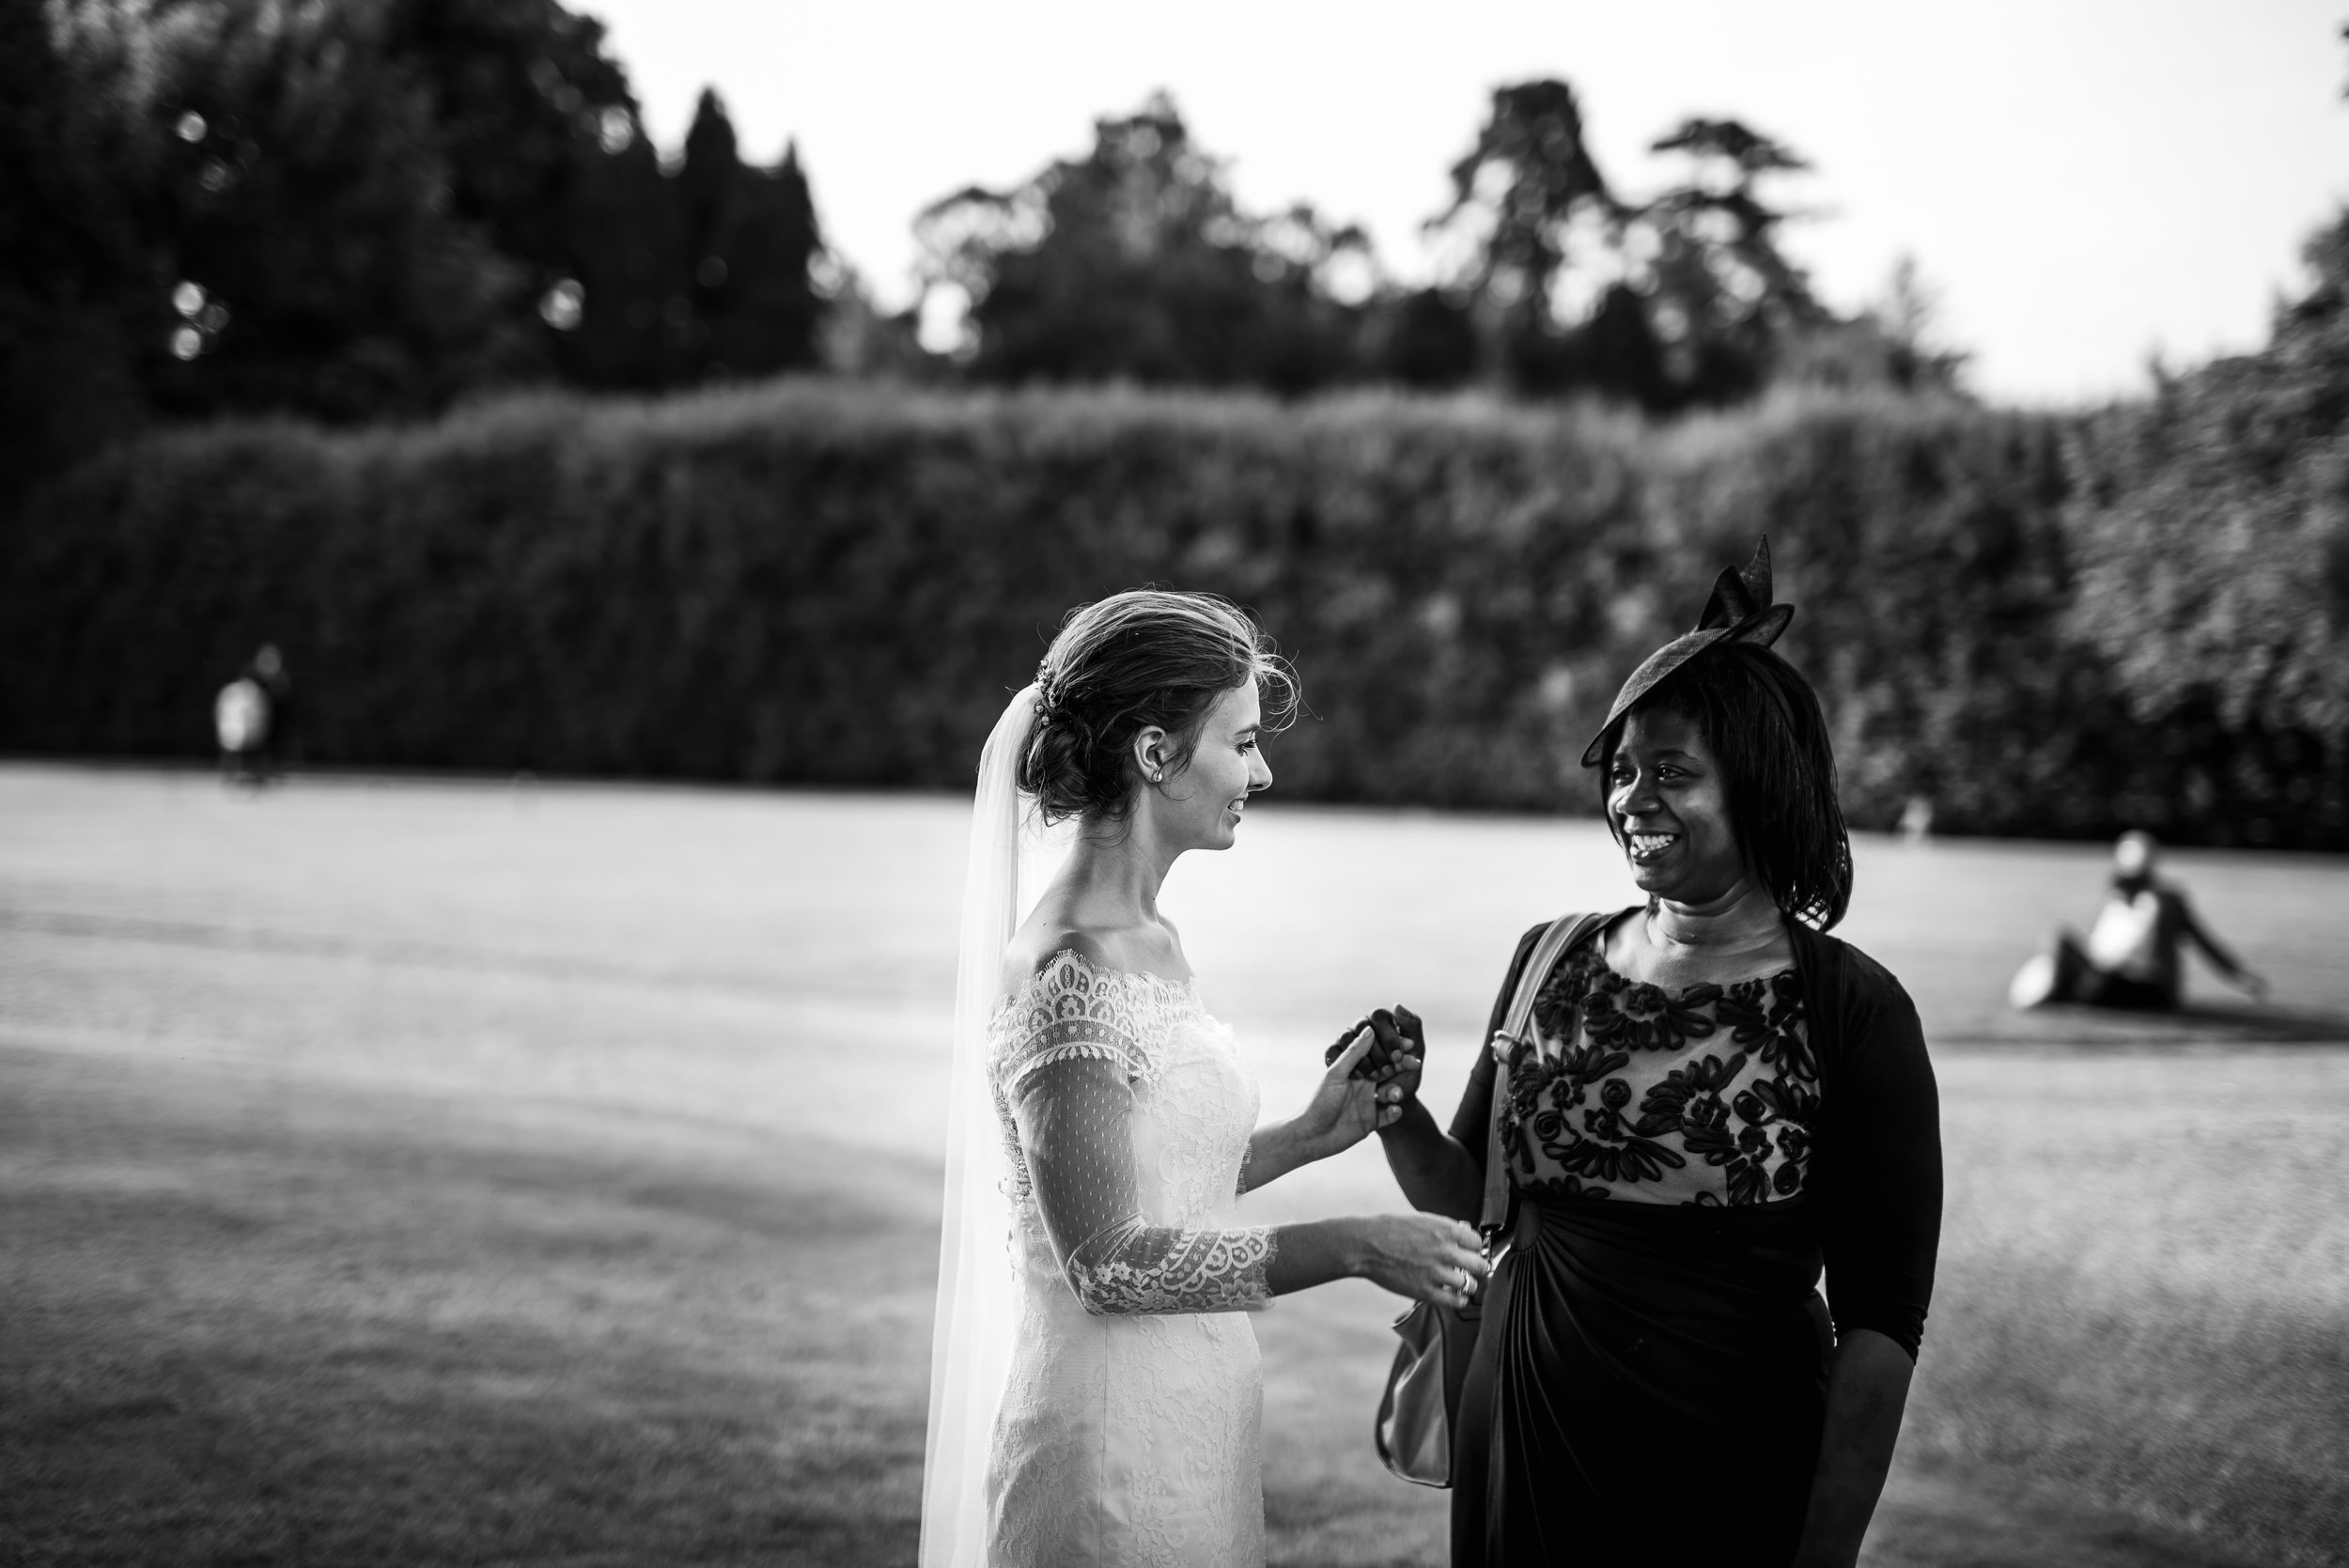 Haughley Park Barn Wedding Photography - Megan & Myles (25).jpg